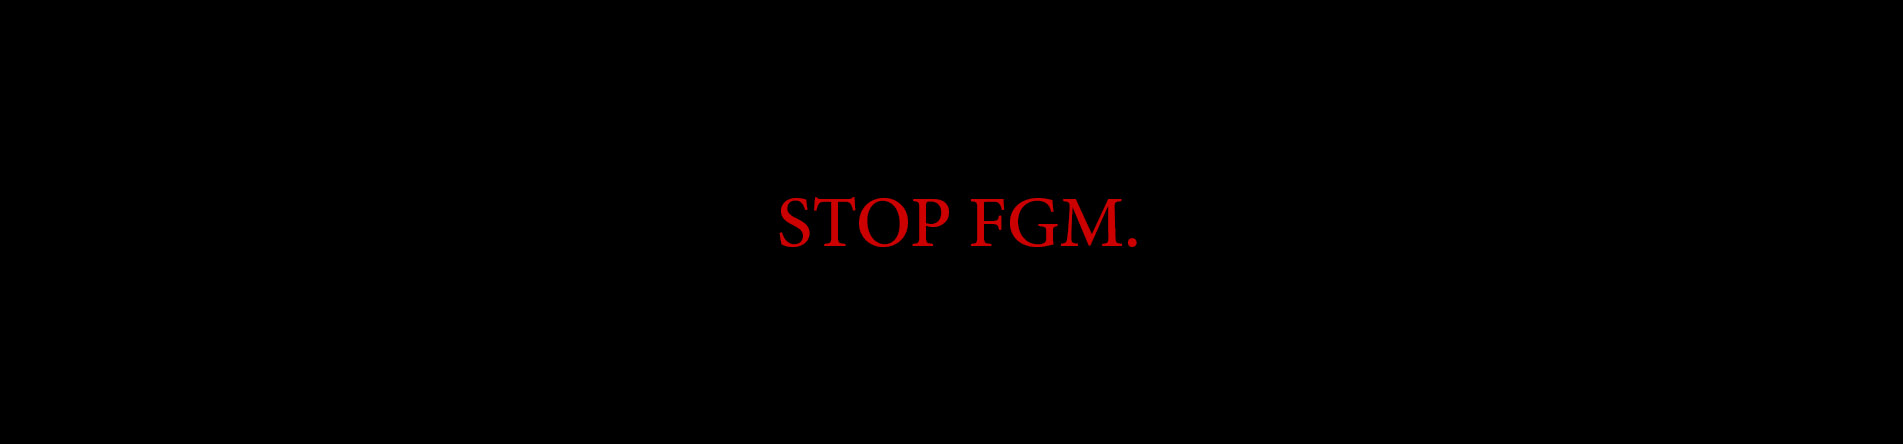 FGM Banner new2